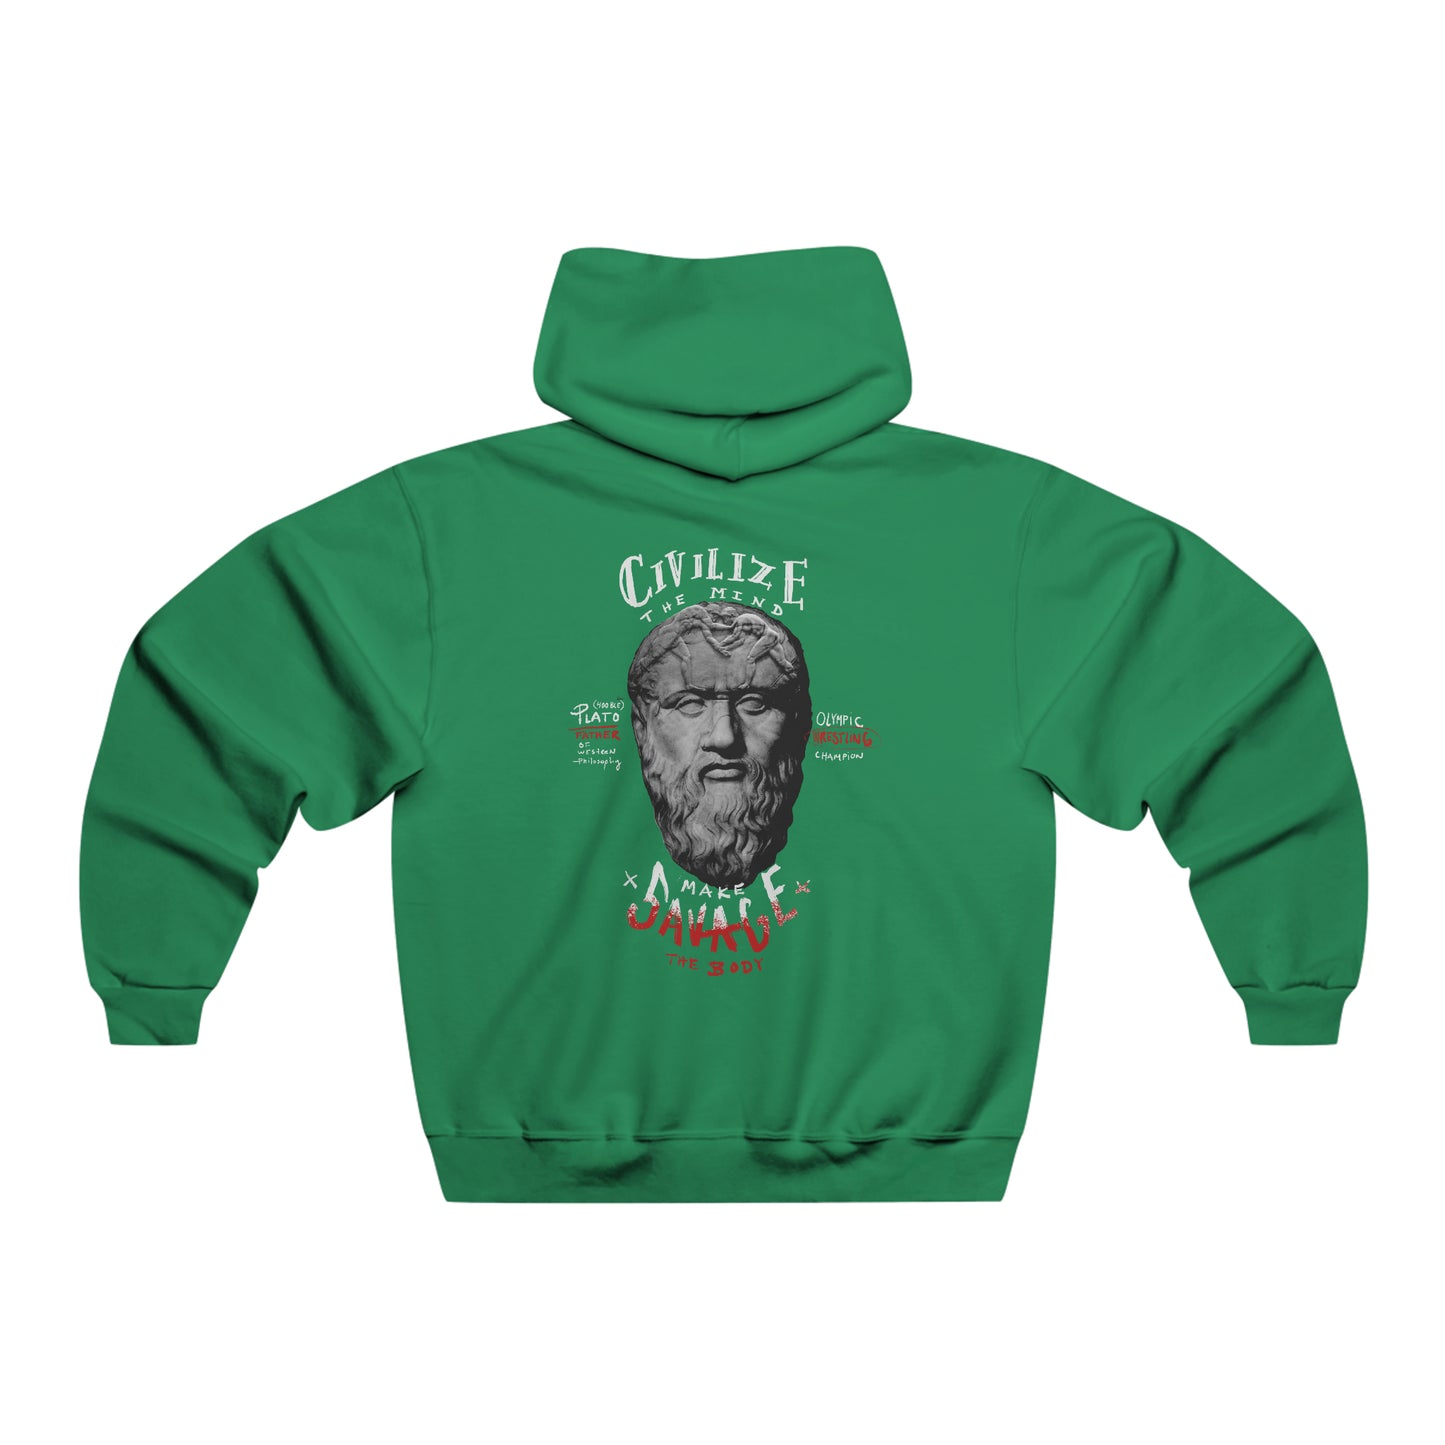 Civilized MIND, Savage BODY---Men's NUBLEND® Hooded Sweatshirt